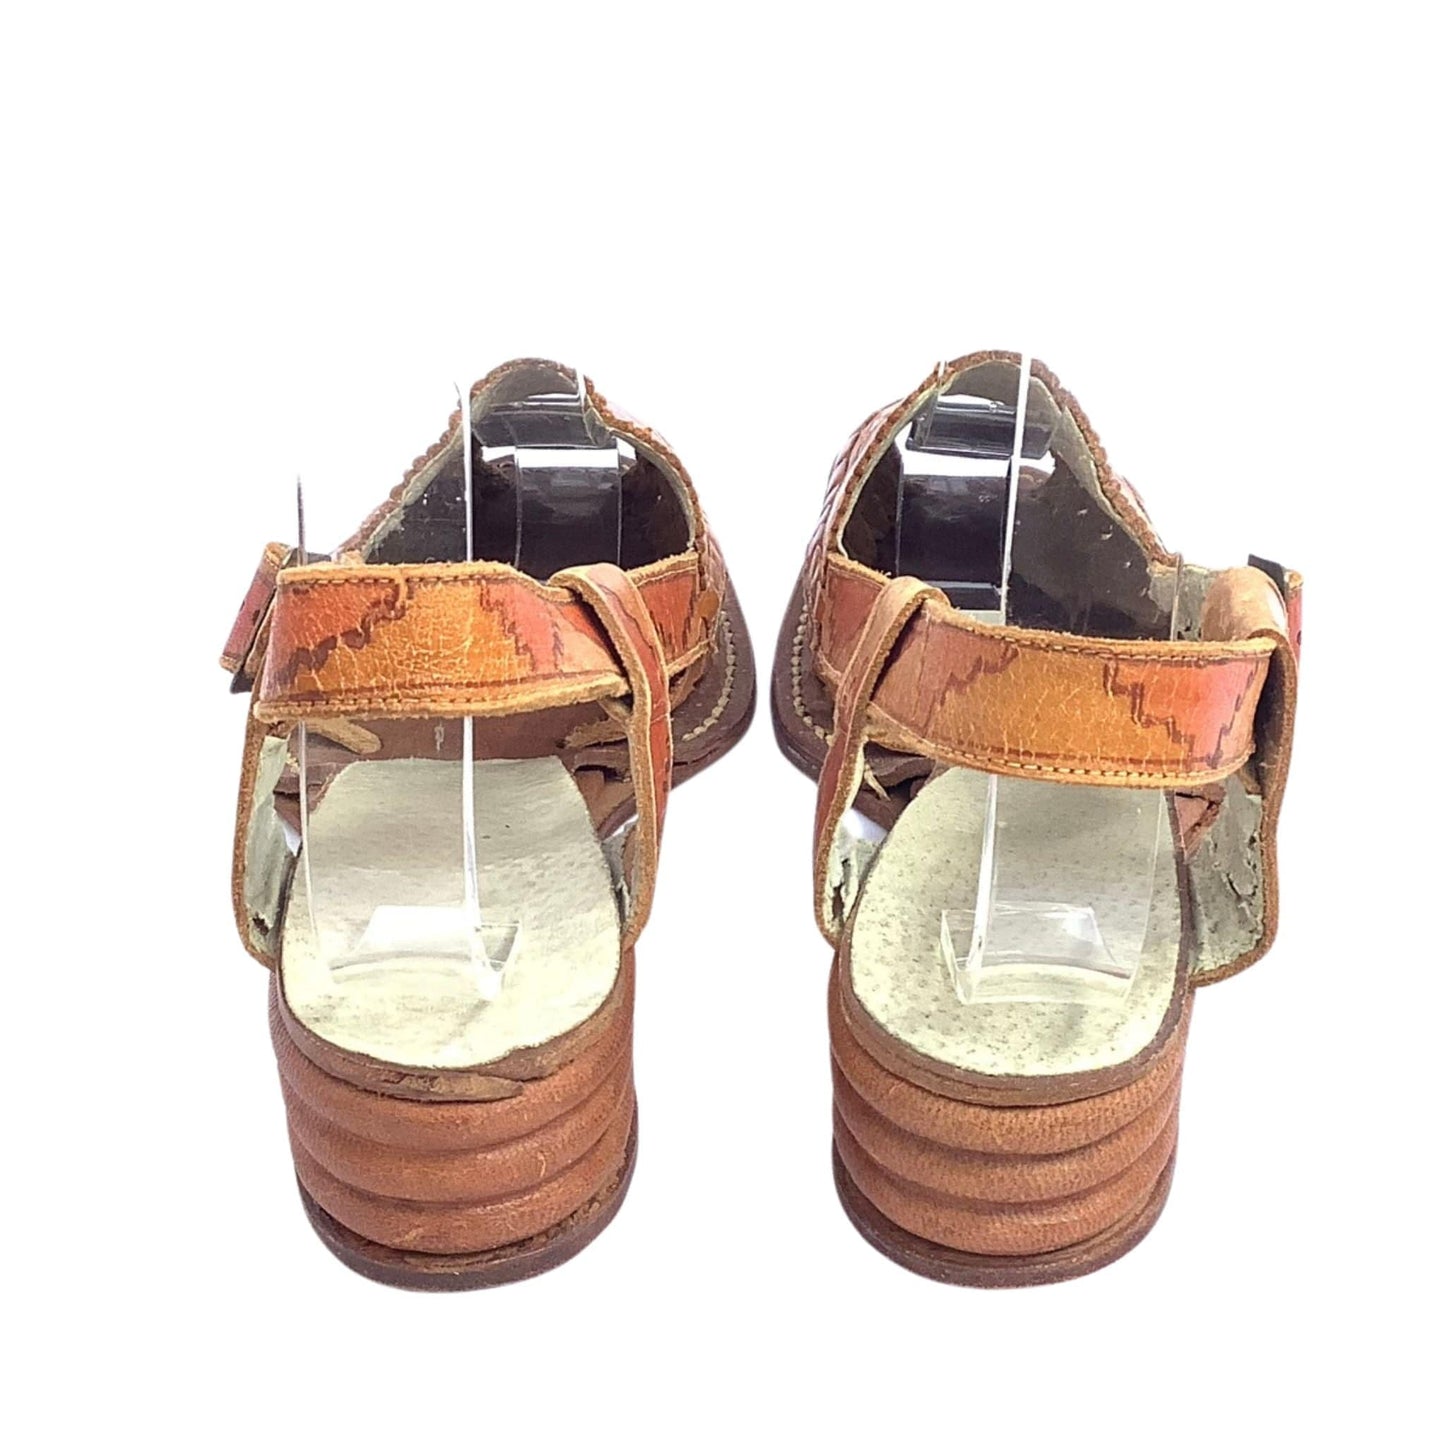 1930s Mexican Sandals 6.5 / Multi / Vintage 1930s